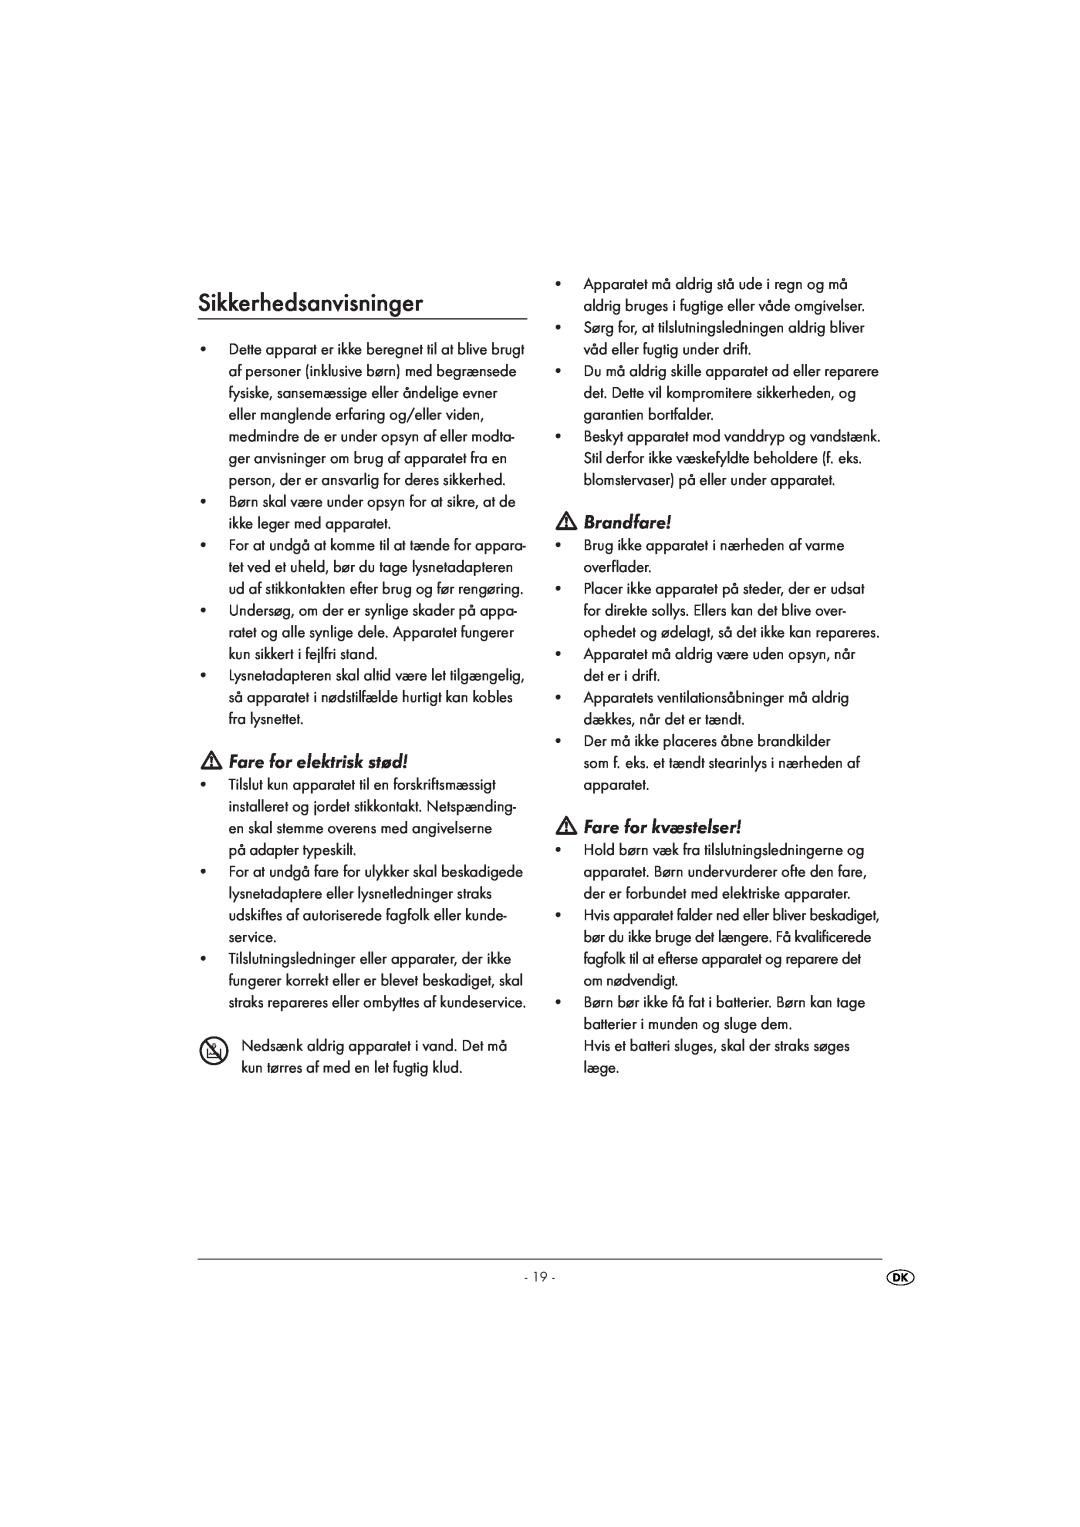 Silvercrest KH 2029 manual Sikkerhedsanvisninger, Fare for elektrisk stød, Brandfare, Fare for kvæstelser 